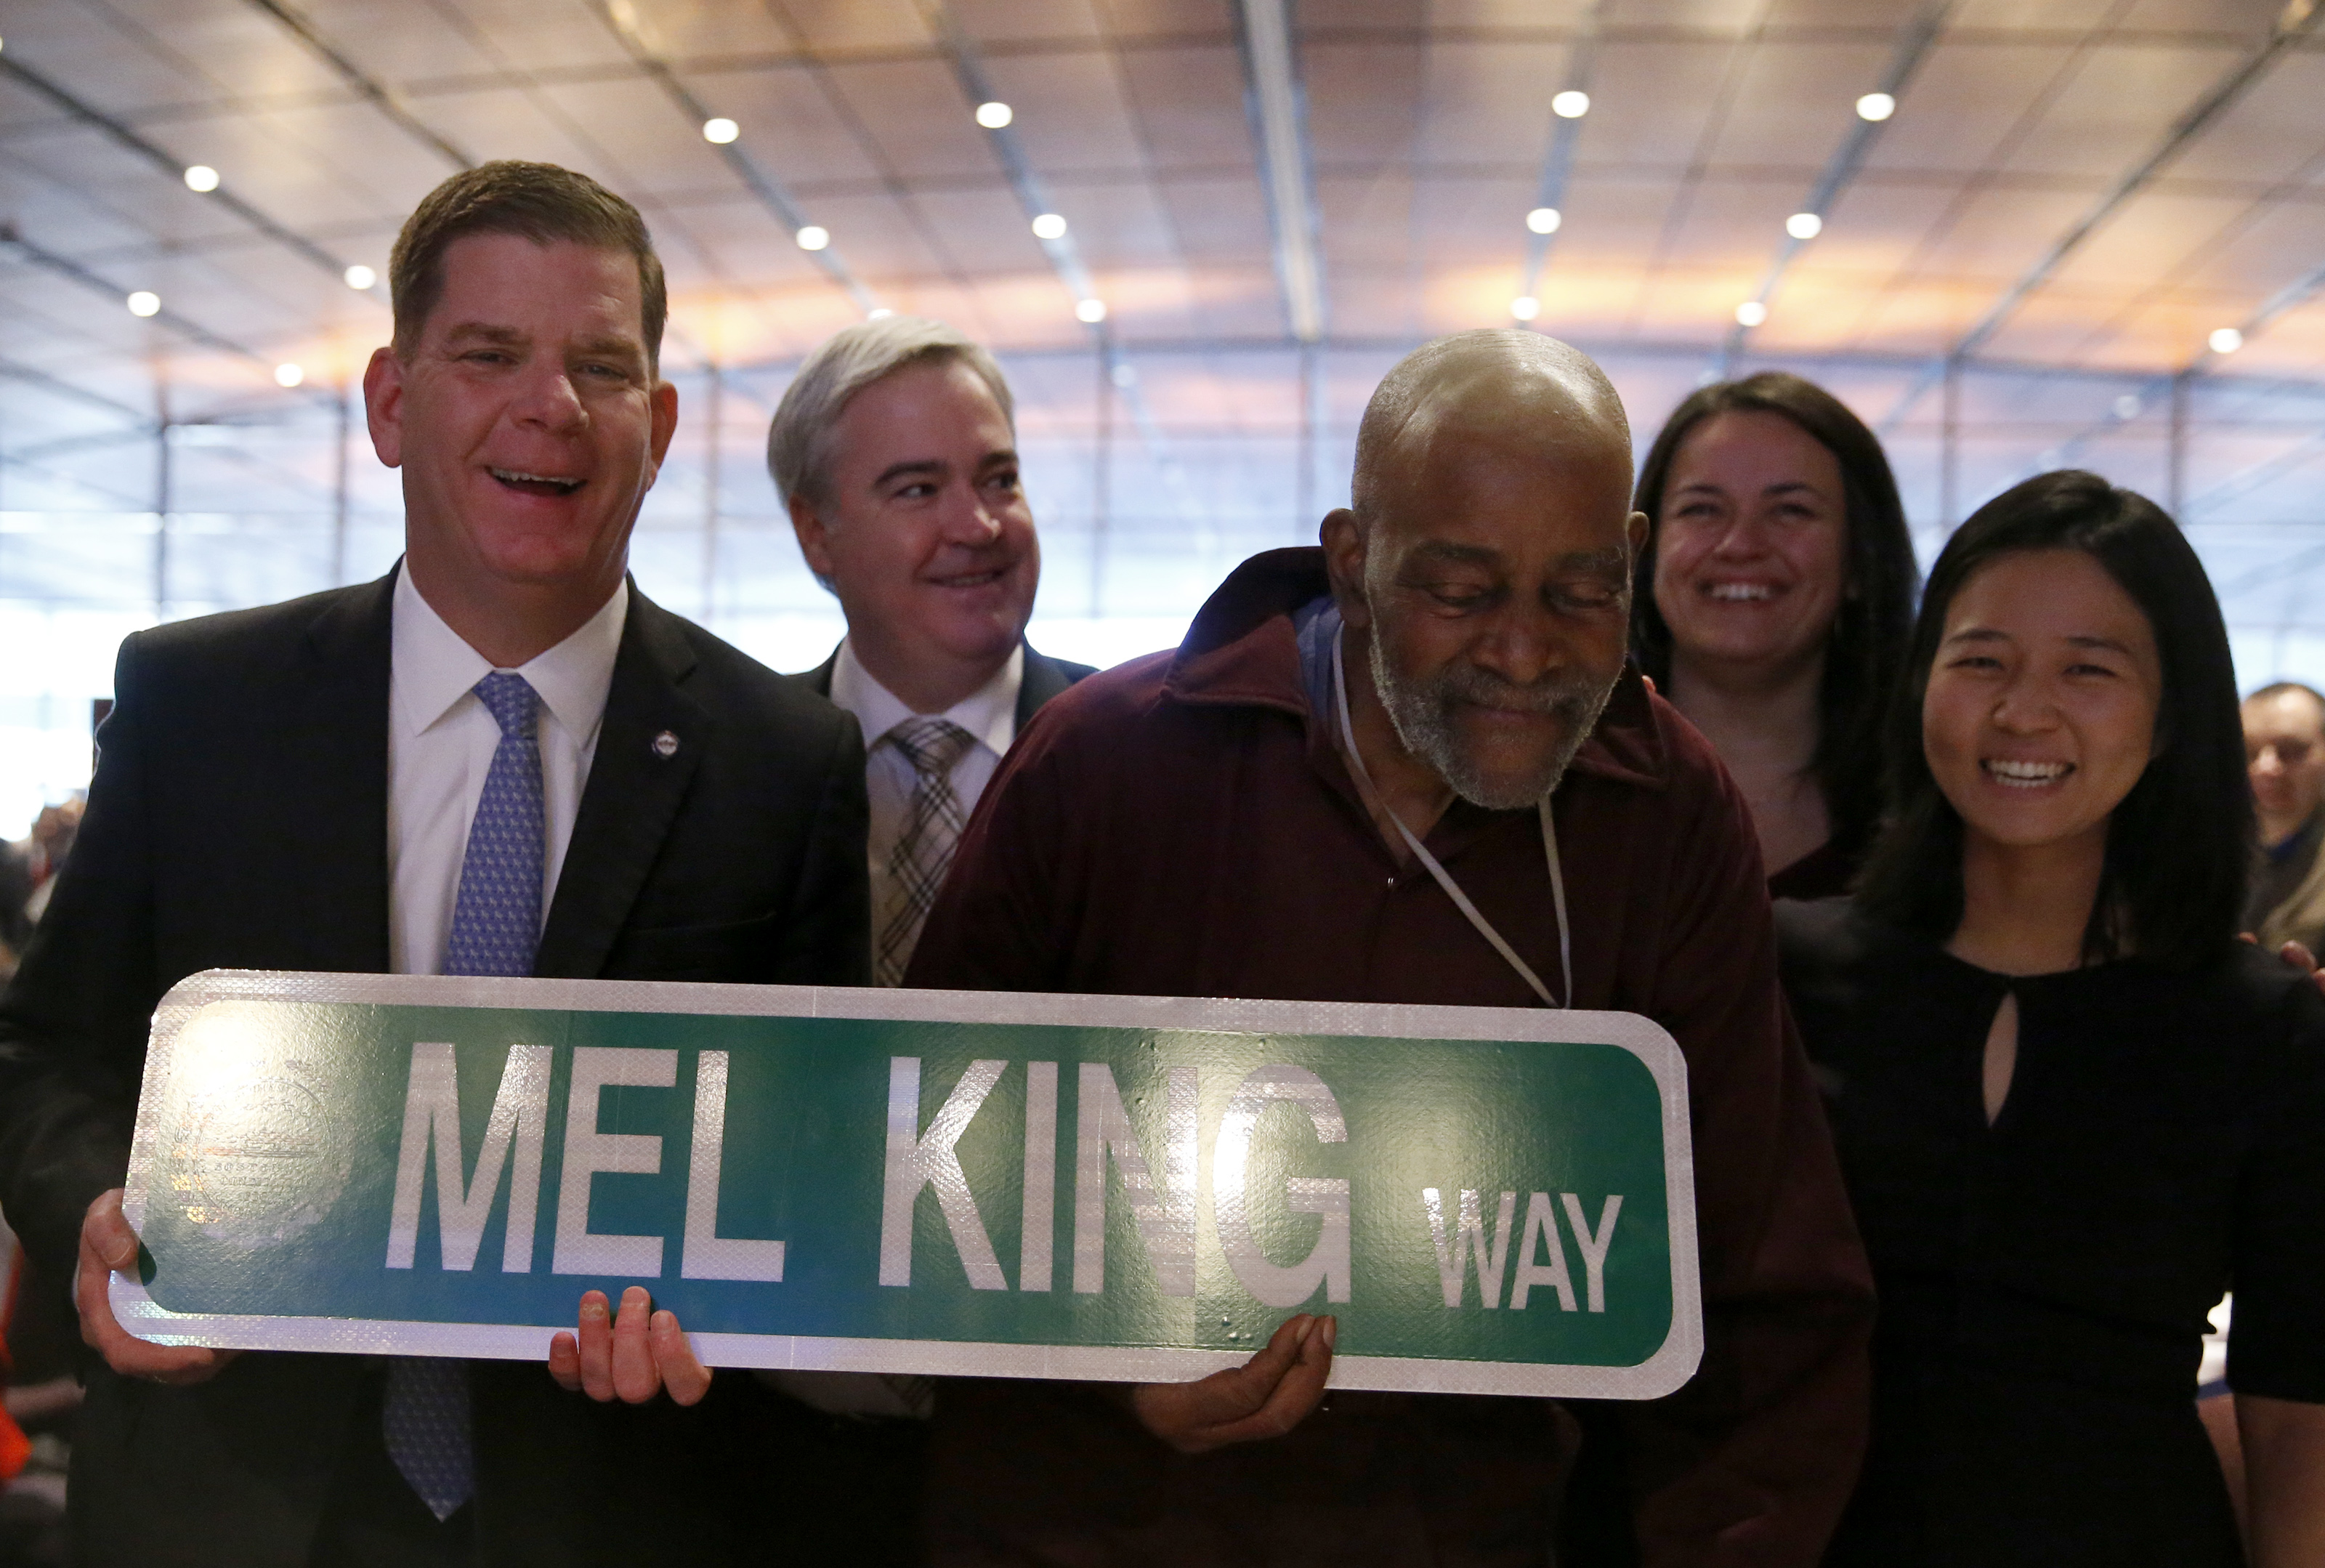 PHOTOS: Boston Civil Rights Icon Mel King Through the Years